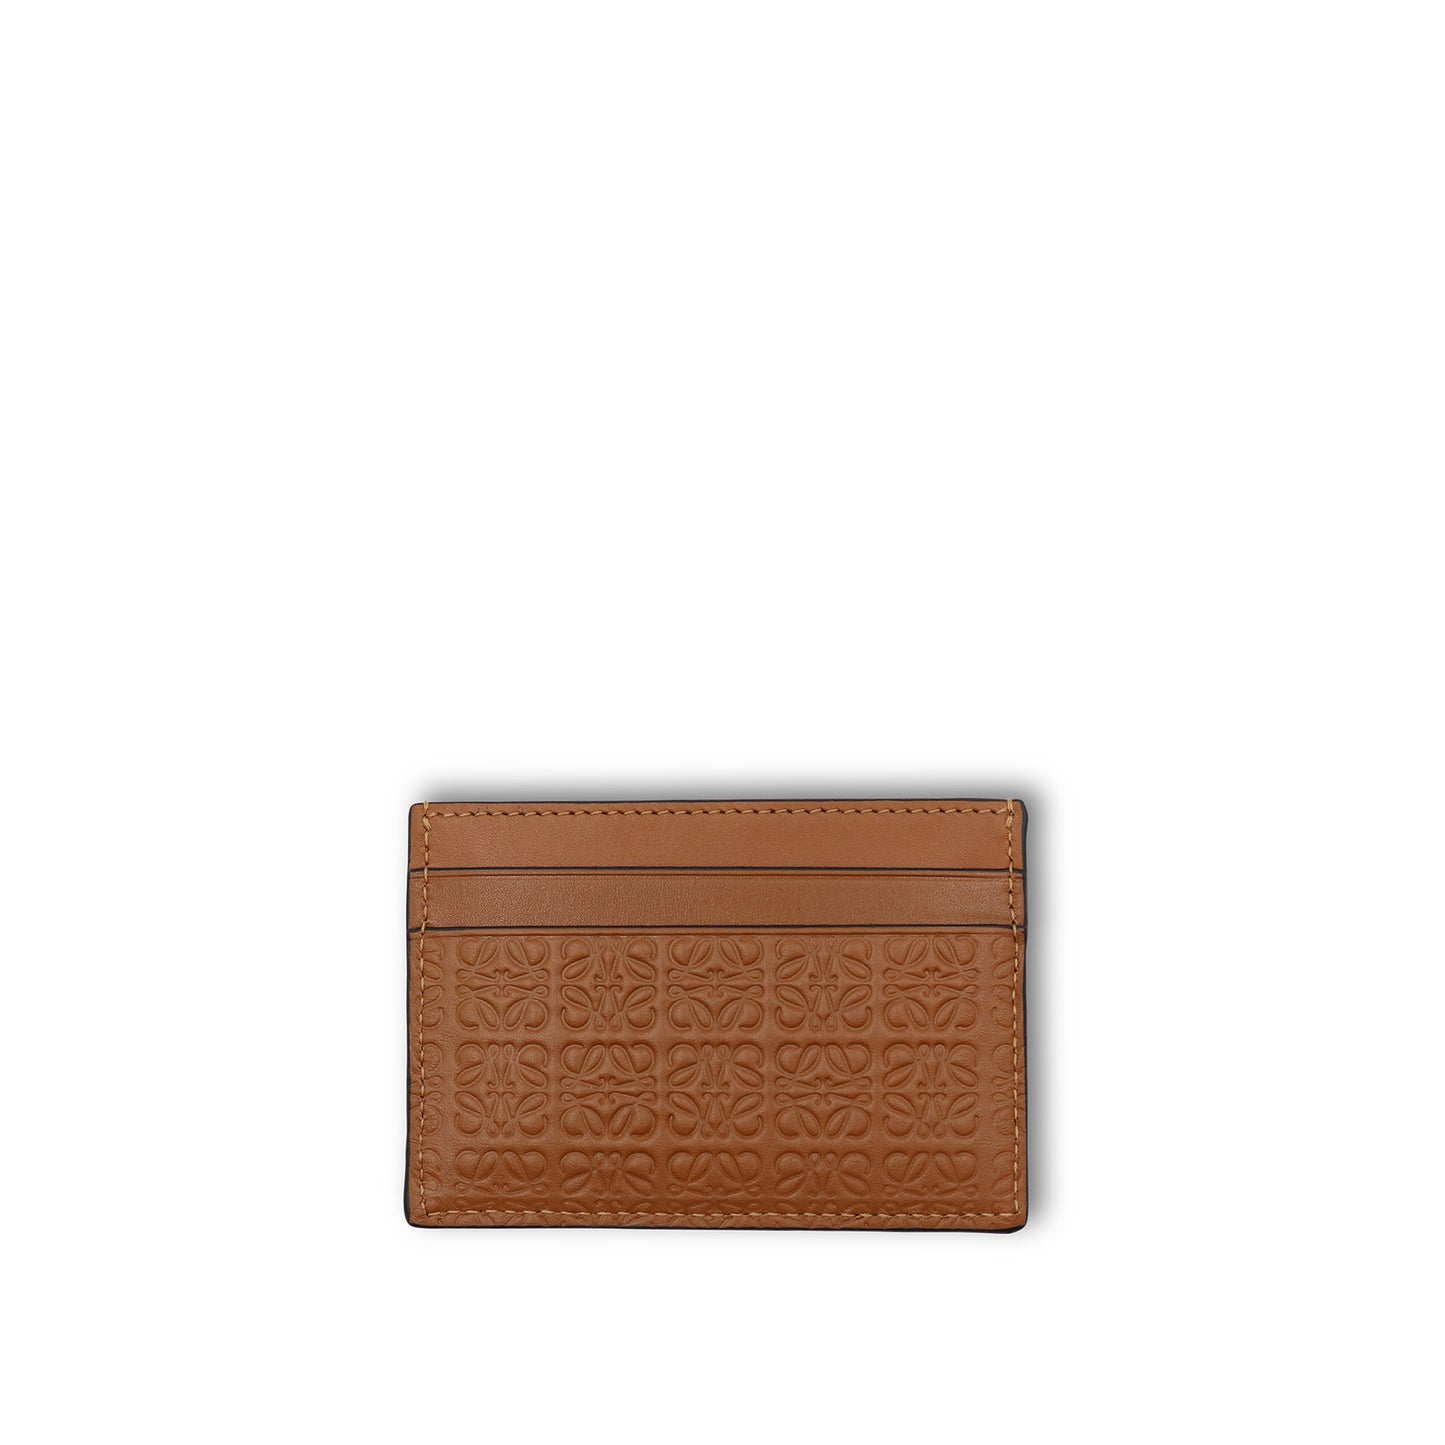 Repeat Plain Cardholder in Embossed Calf Leather in Tan